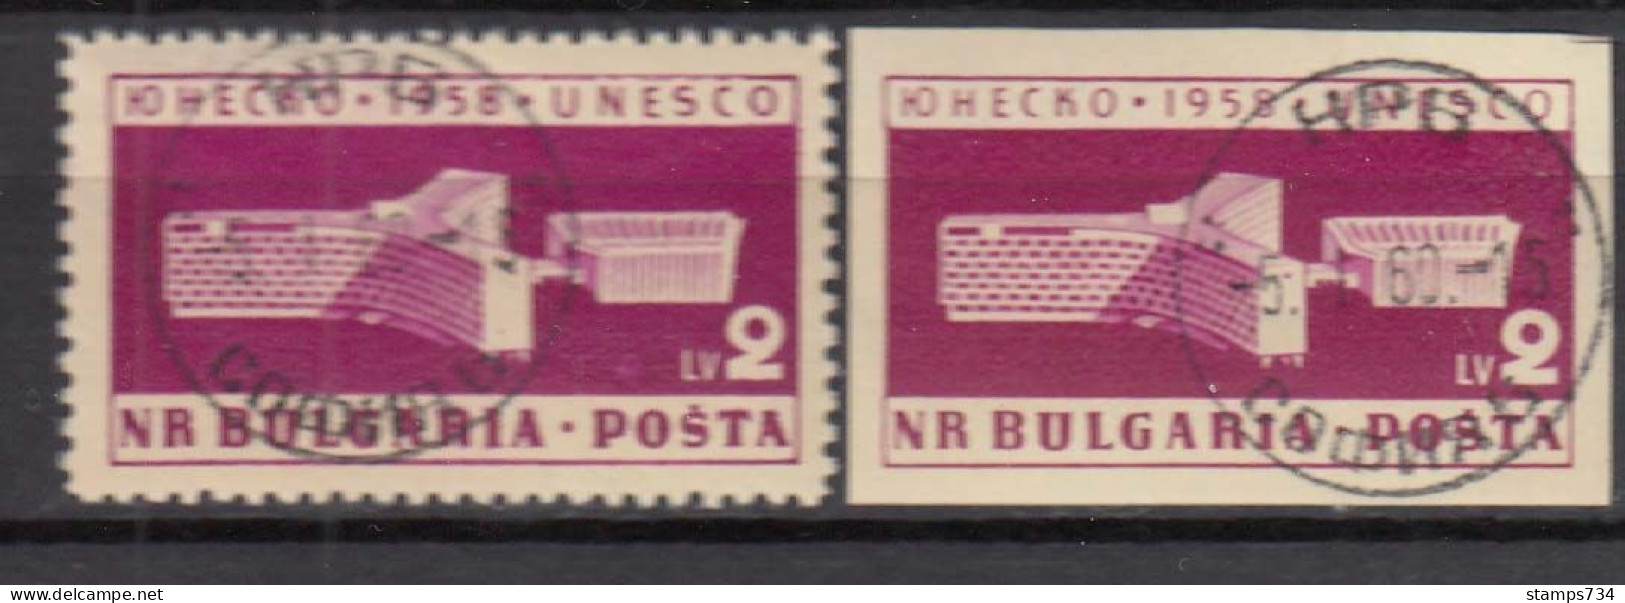 Bulgaria 1959 - UNESCO, Mi-Nr. 1103 A+B, Used - Usati